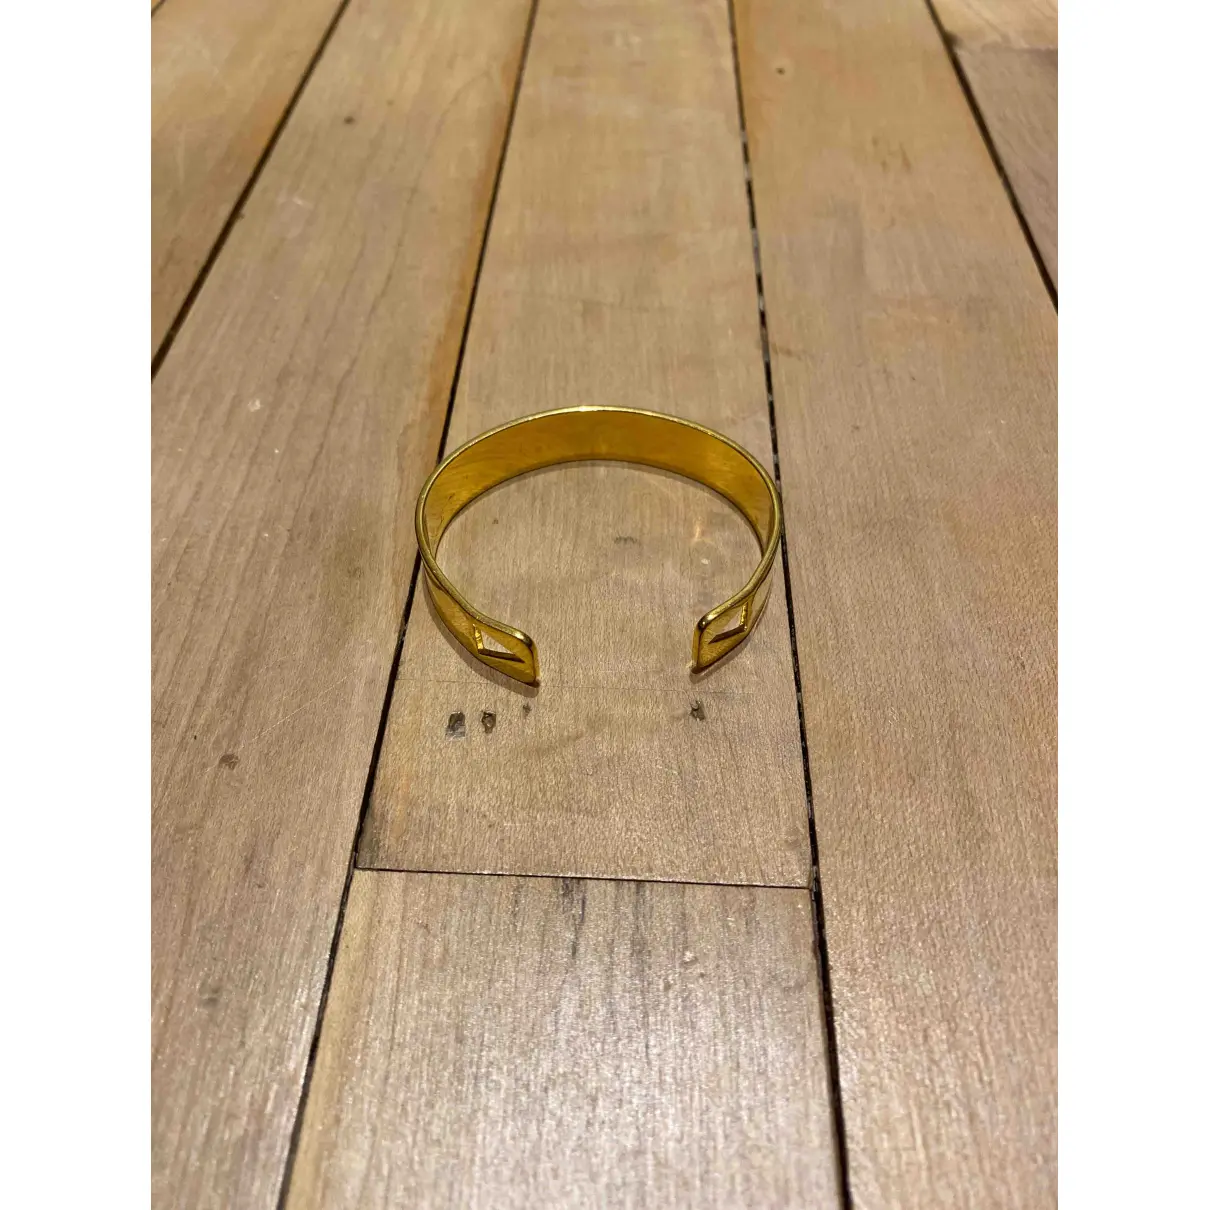 Buy Arme De L'Amour Gold Gold plated Bracelet online